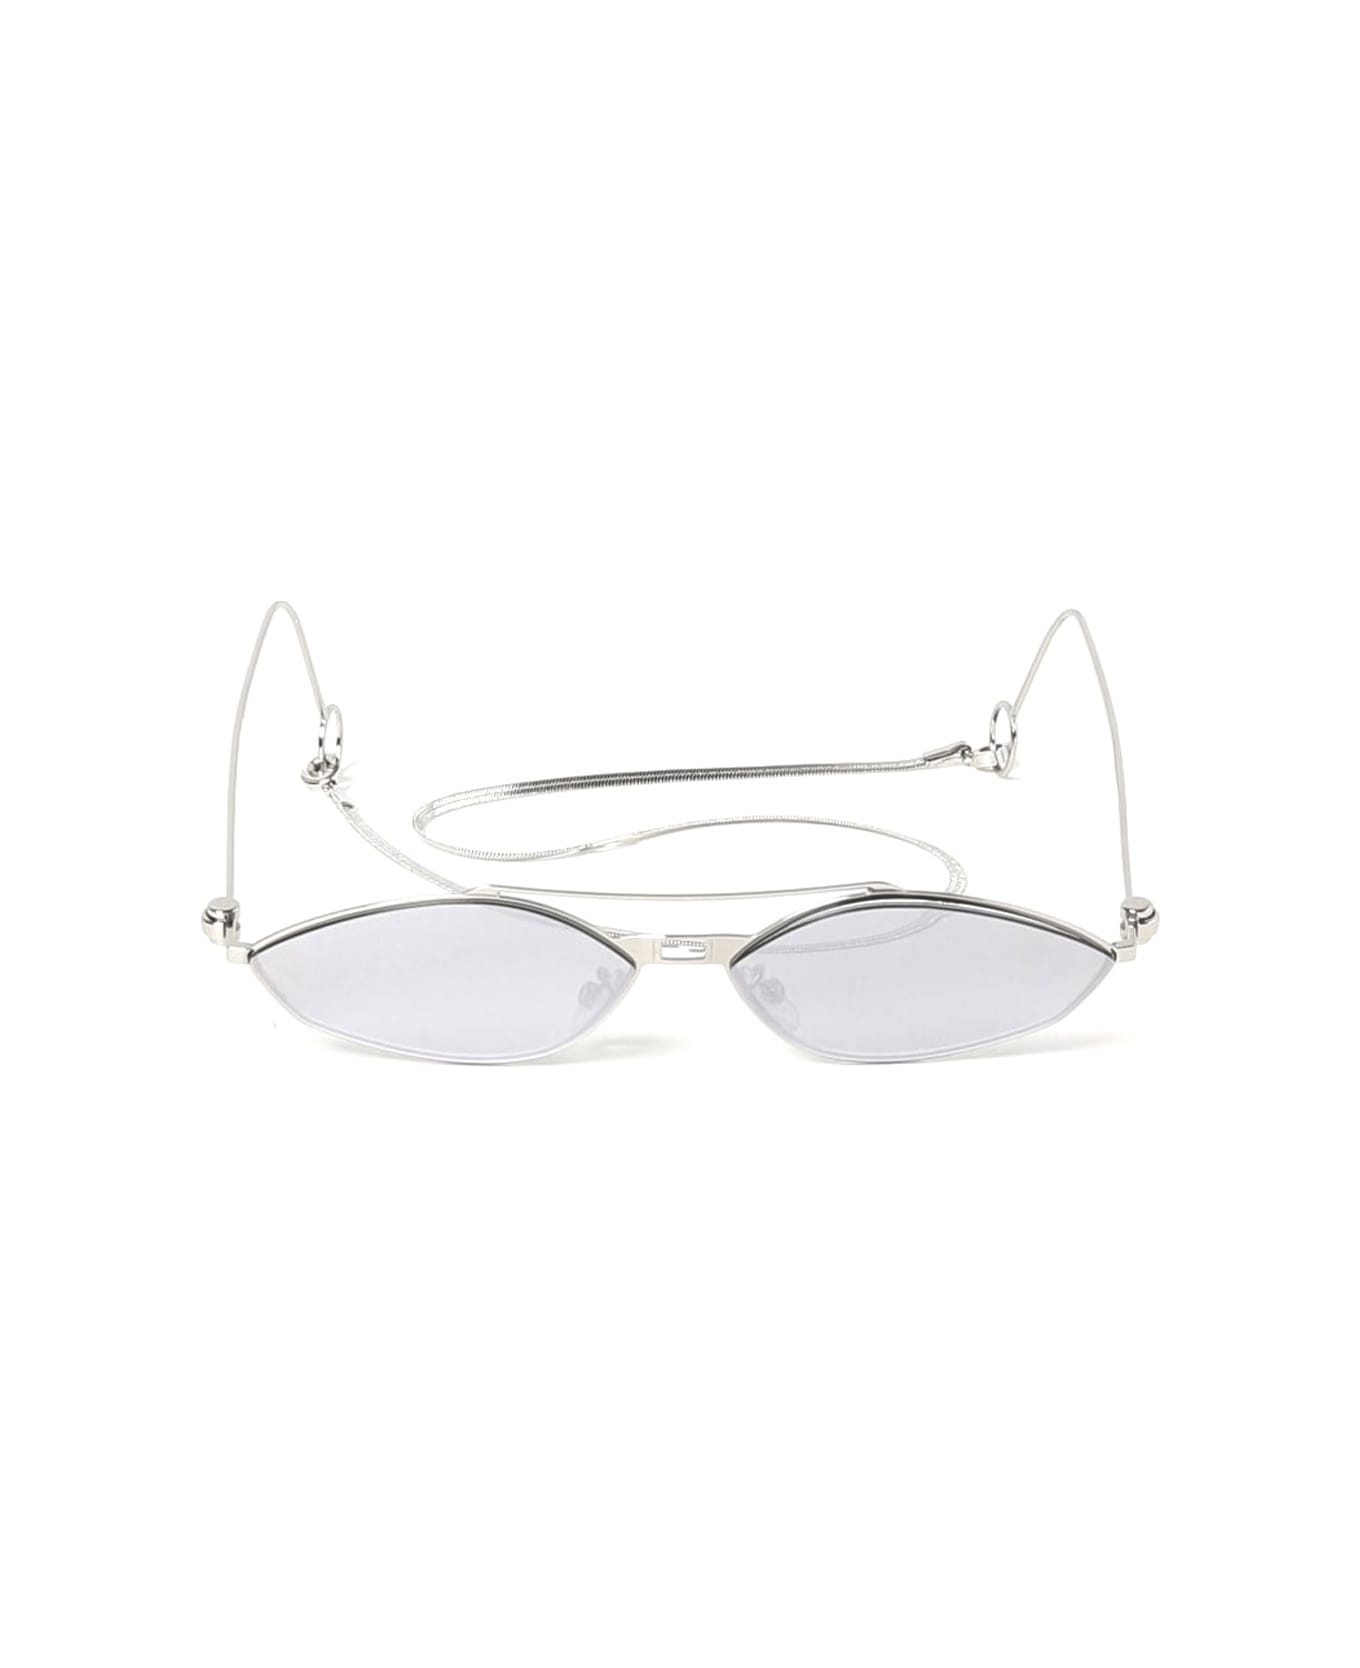 Fendi Dark Fe40114u-y 16c Sunglasses - Argento